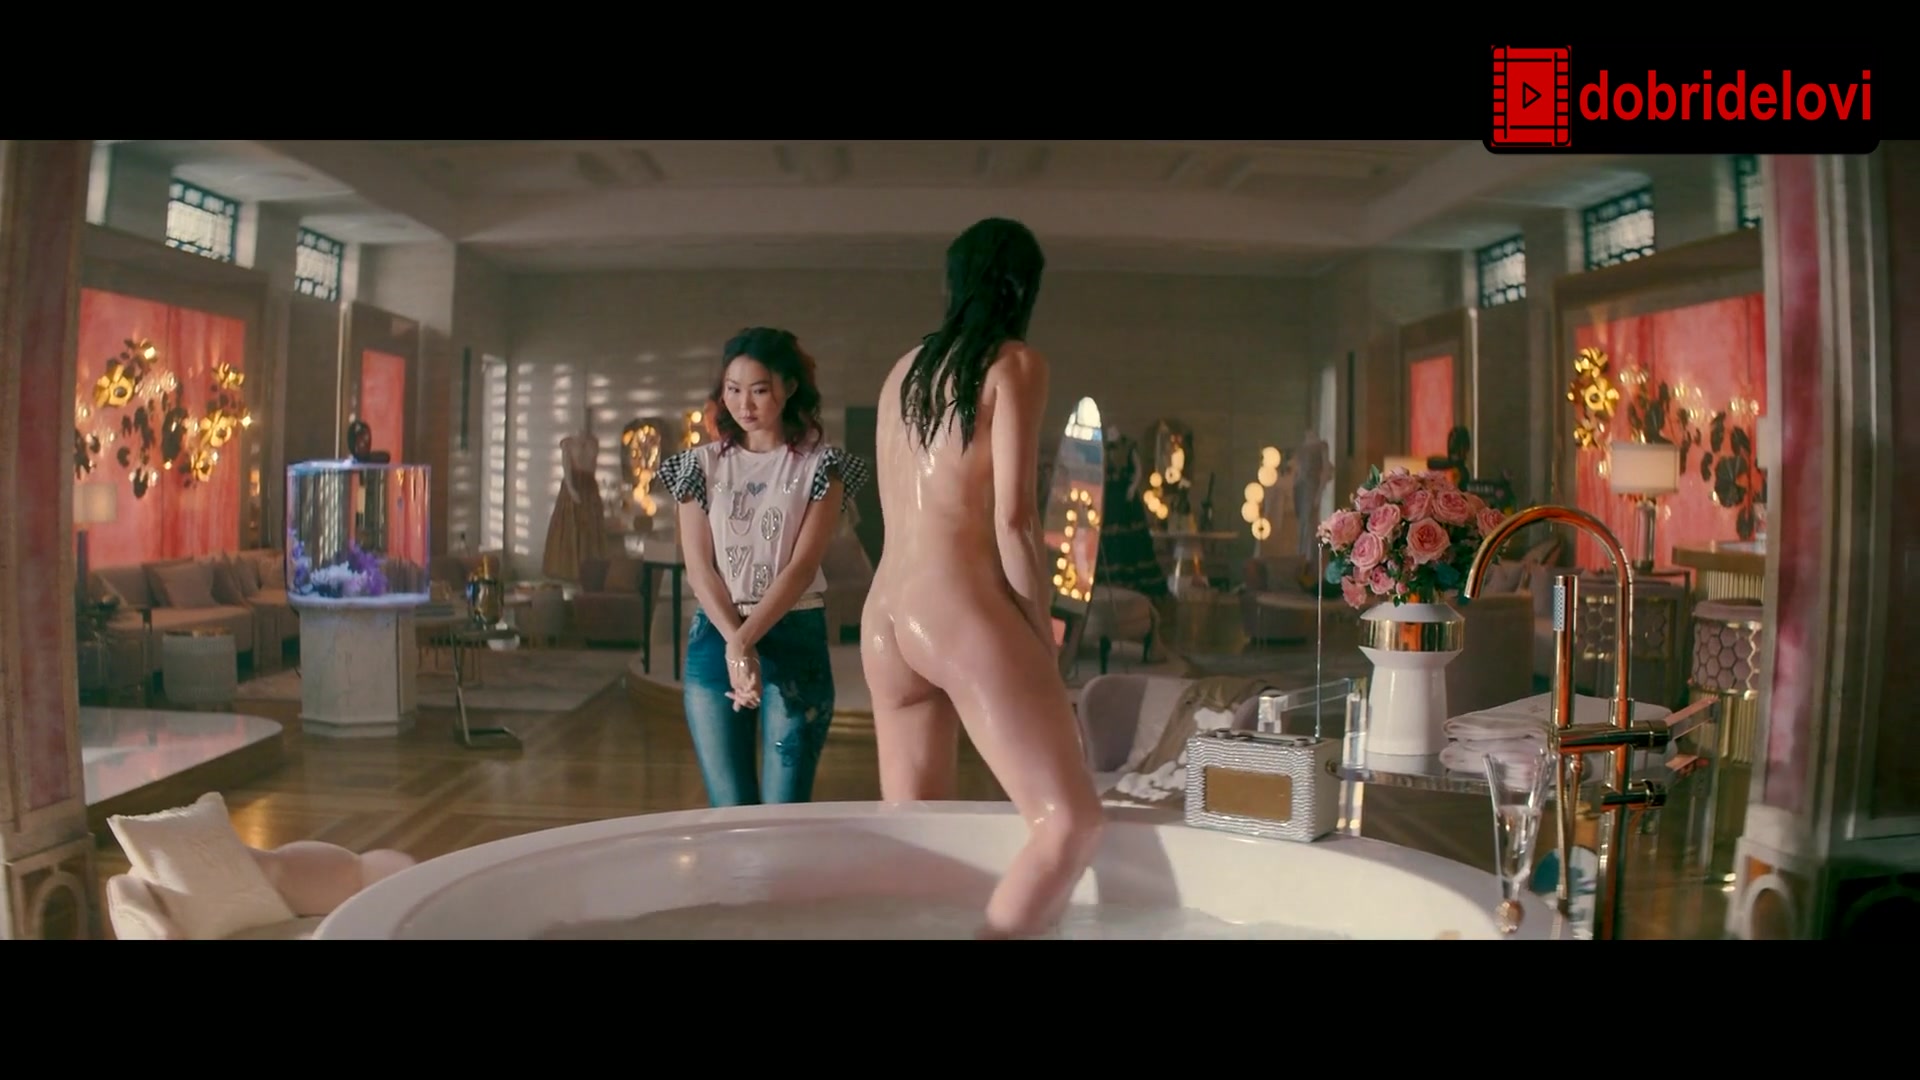 Watch Zrinka Cvitešić nude bathtub scene from The Power video